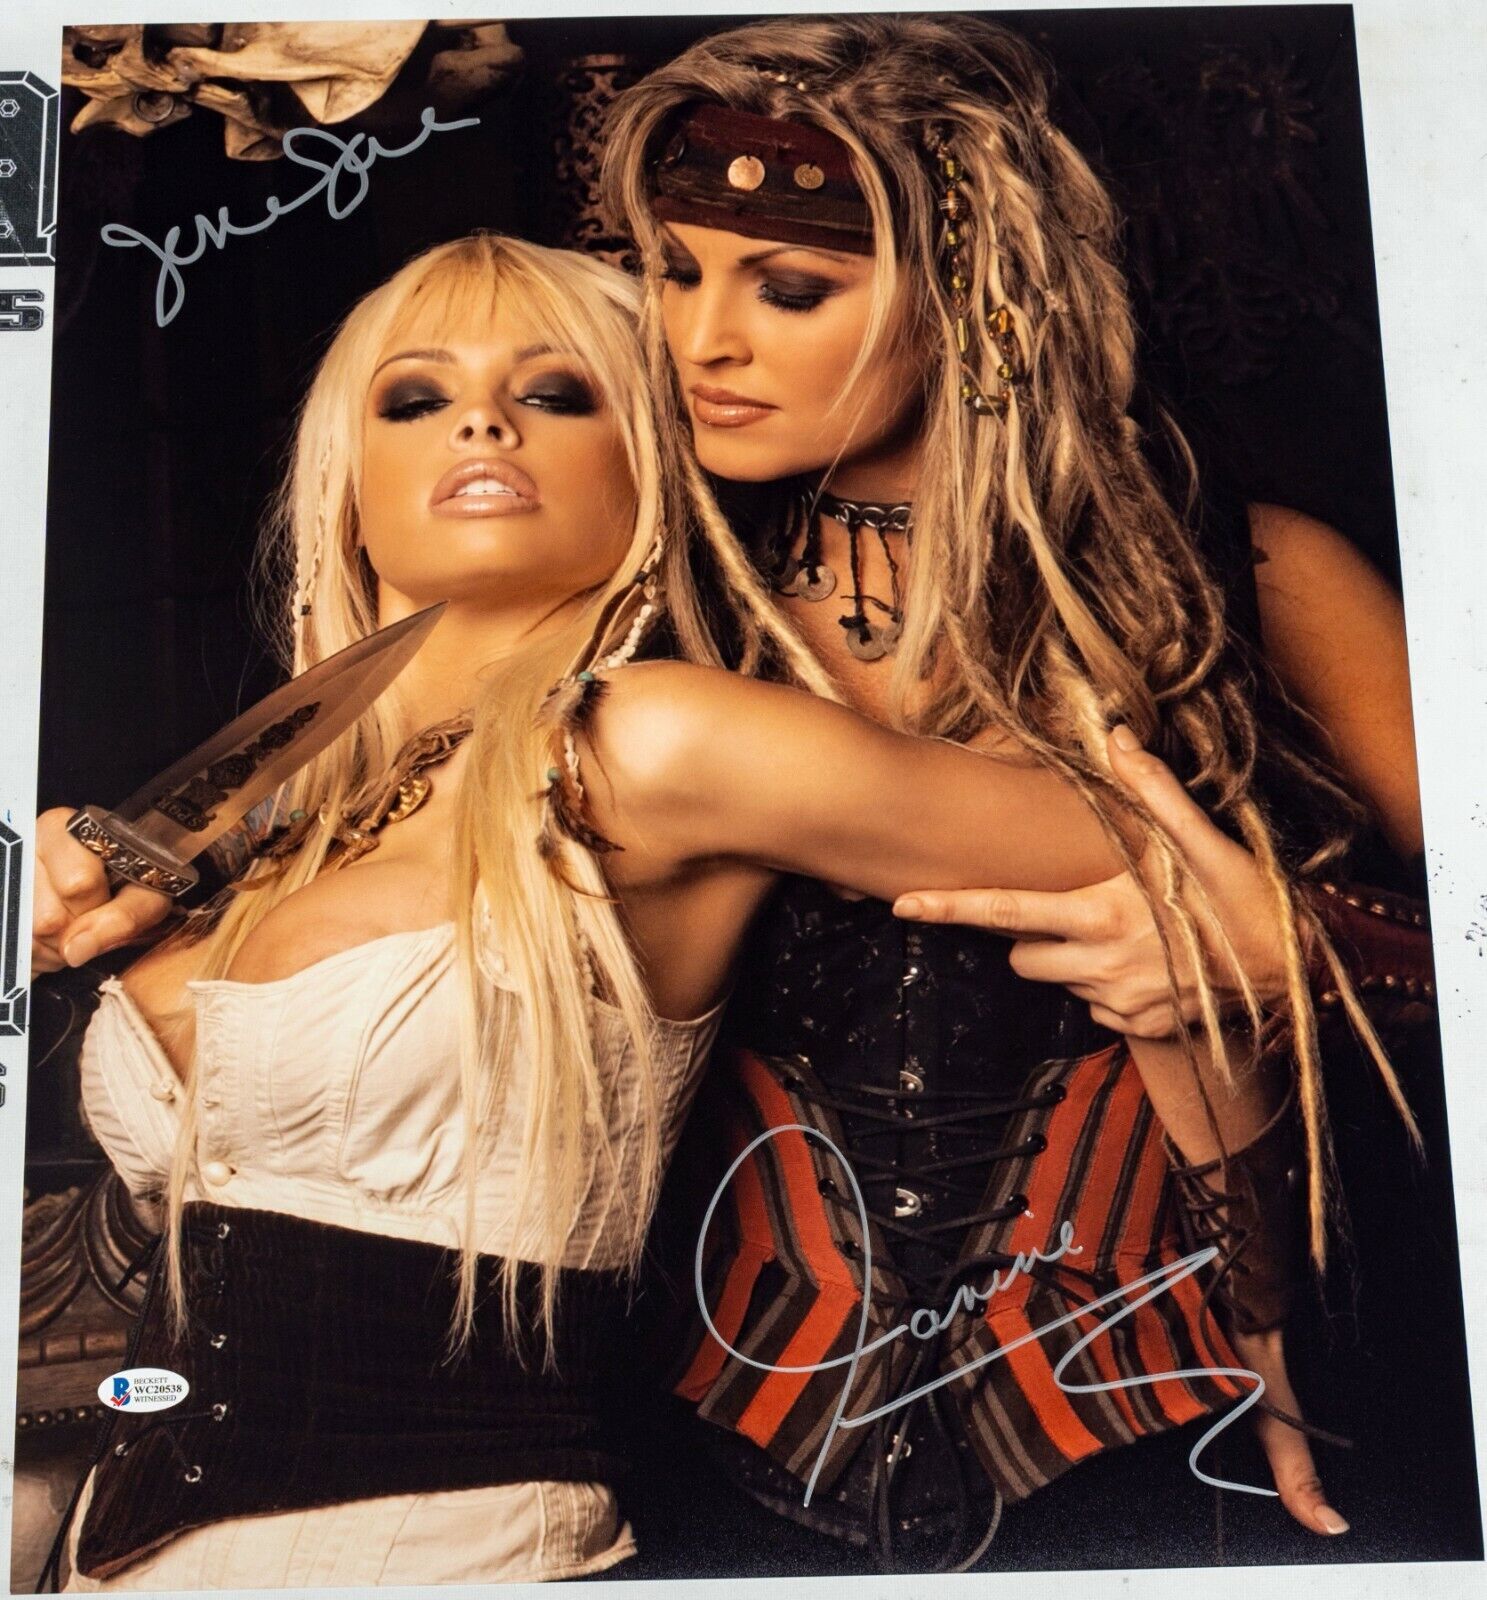 Jesse Jane & Janine Lindemulder Signed 16x20 Photo Poster painting BAS COA Pirates XXX Autograph